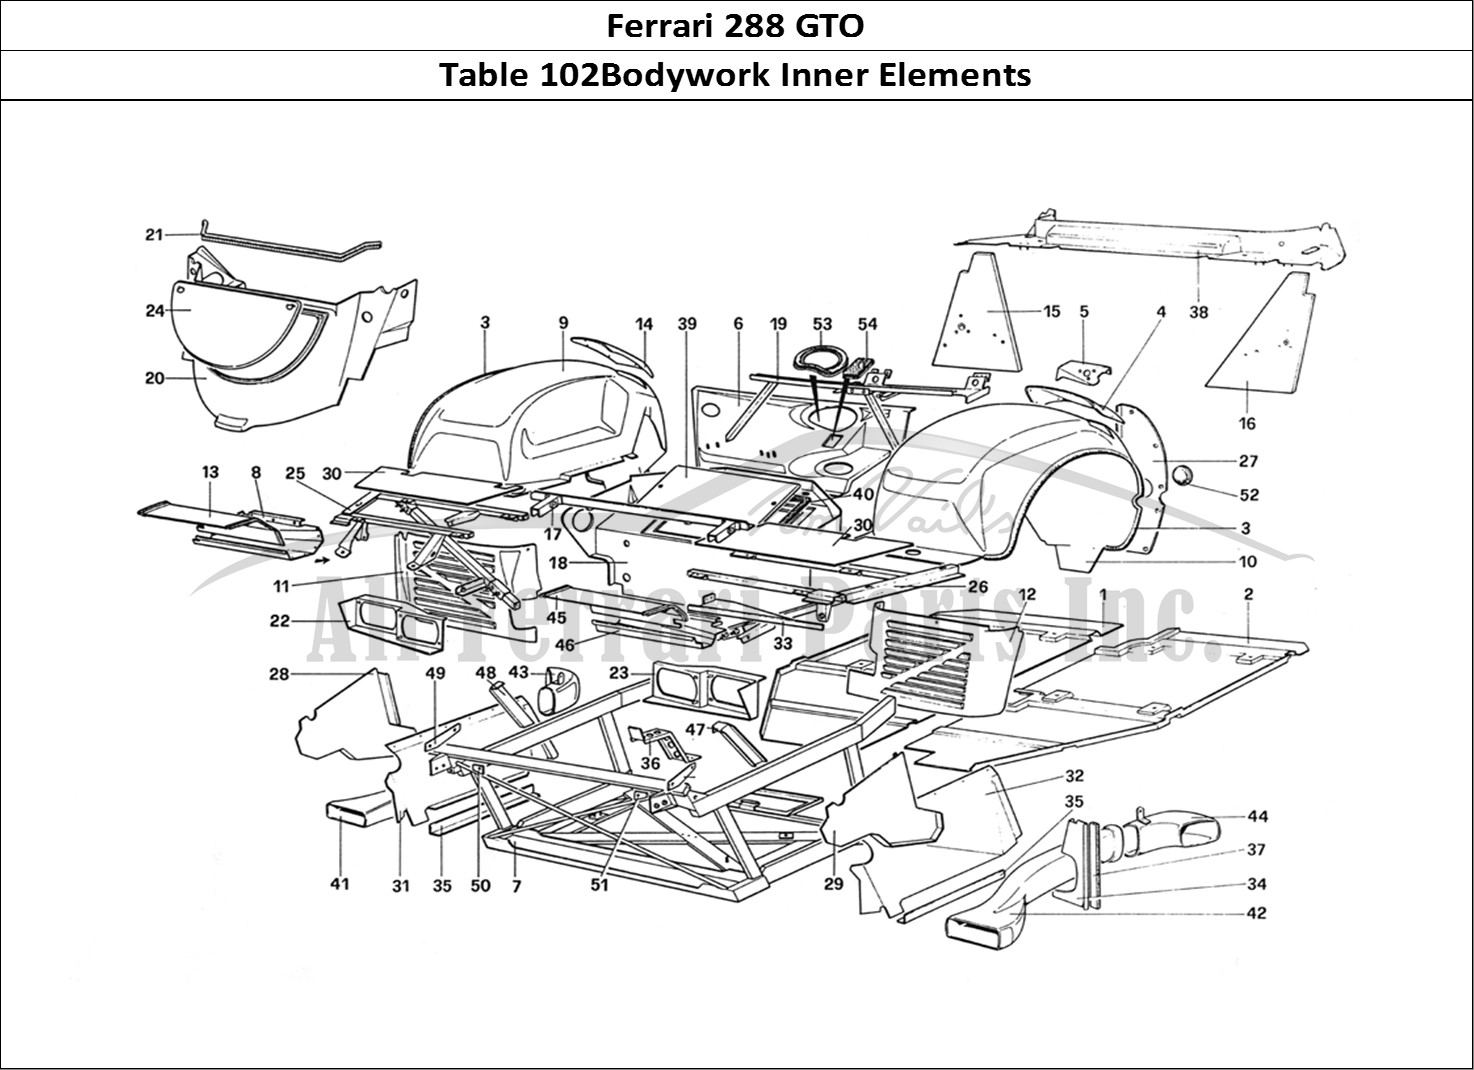 Ferrari Parts Ferrari 288 GTO Page 102 Body Shell - Inner Elemen